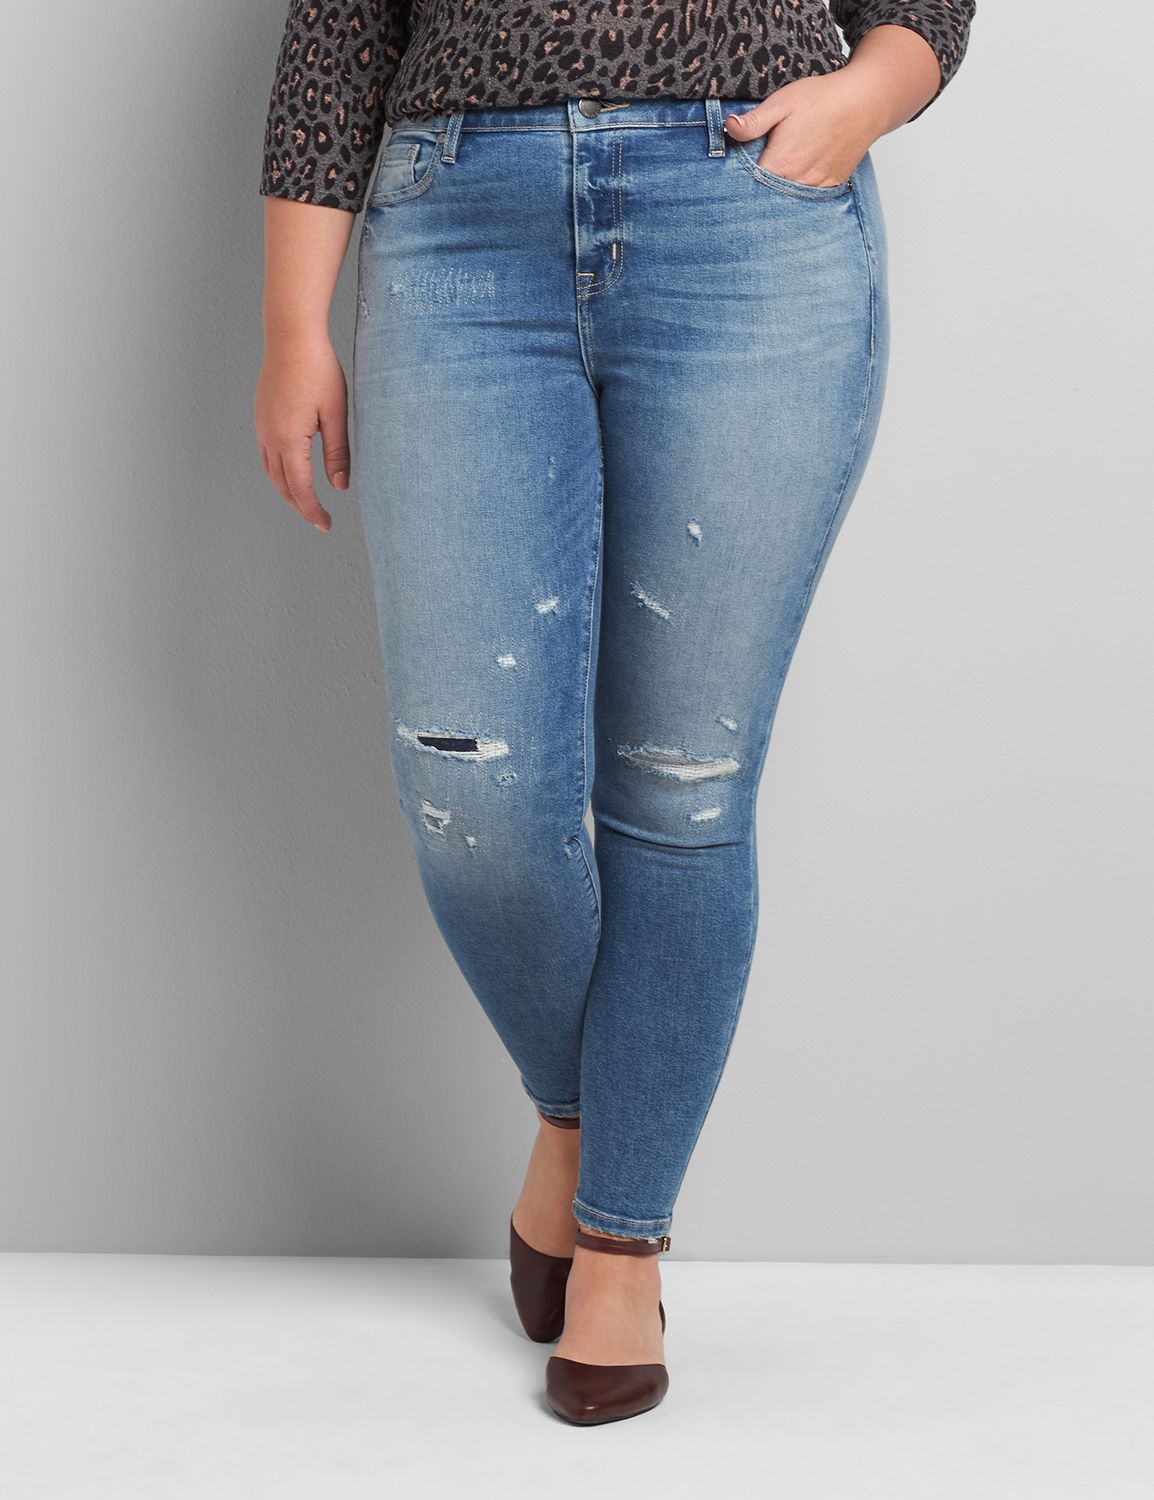 lane bryant distressed jeans